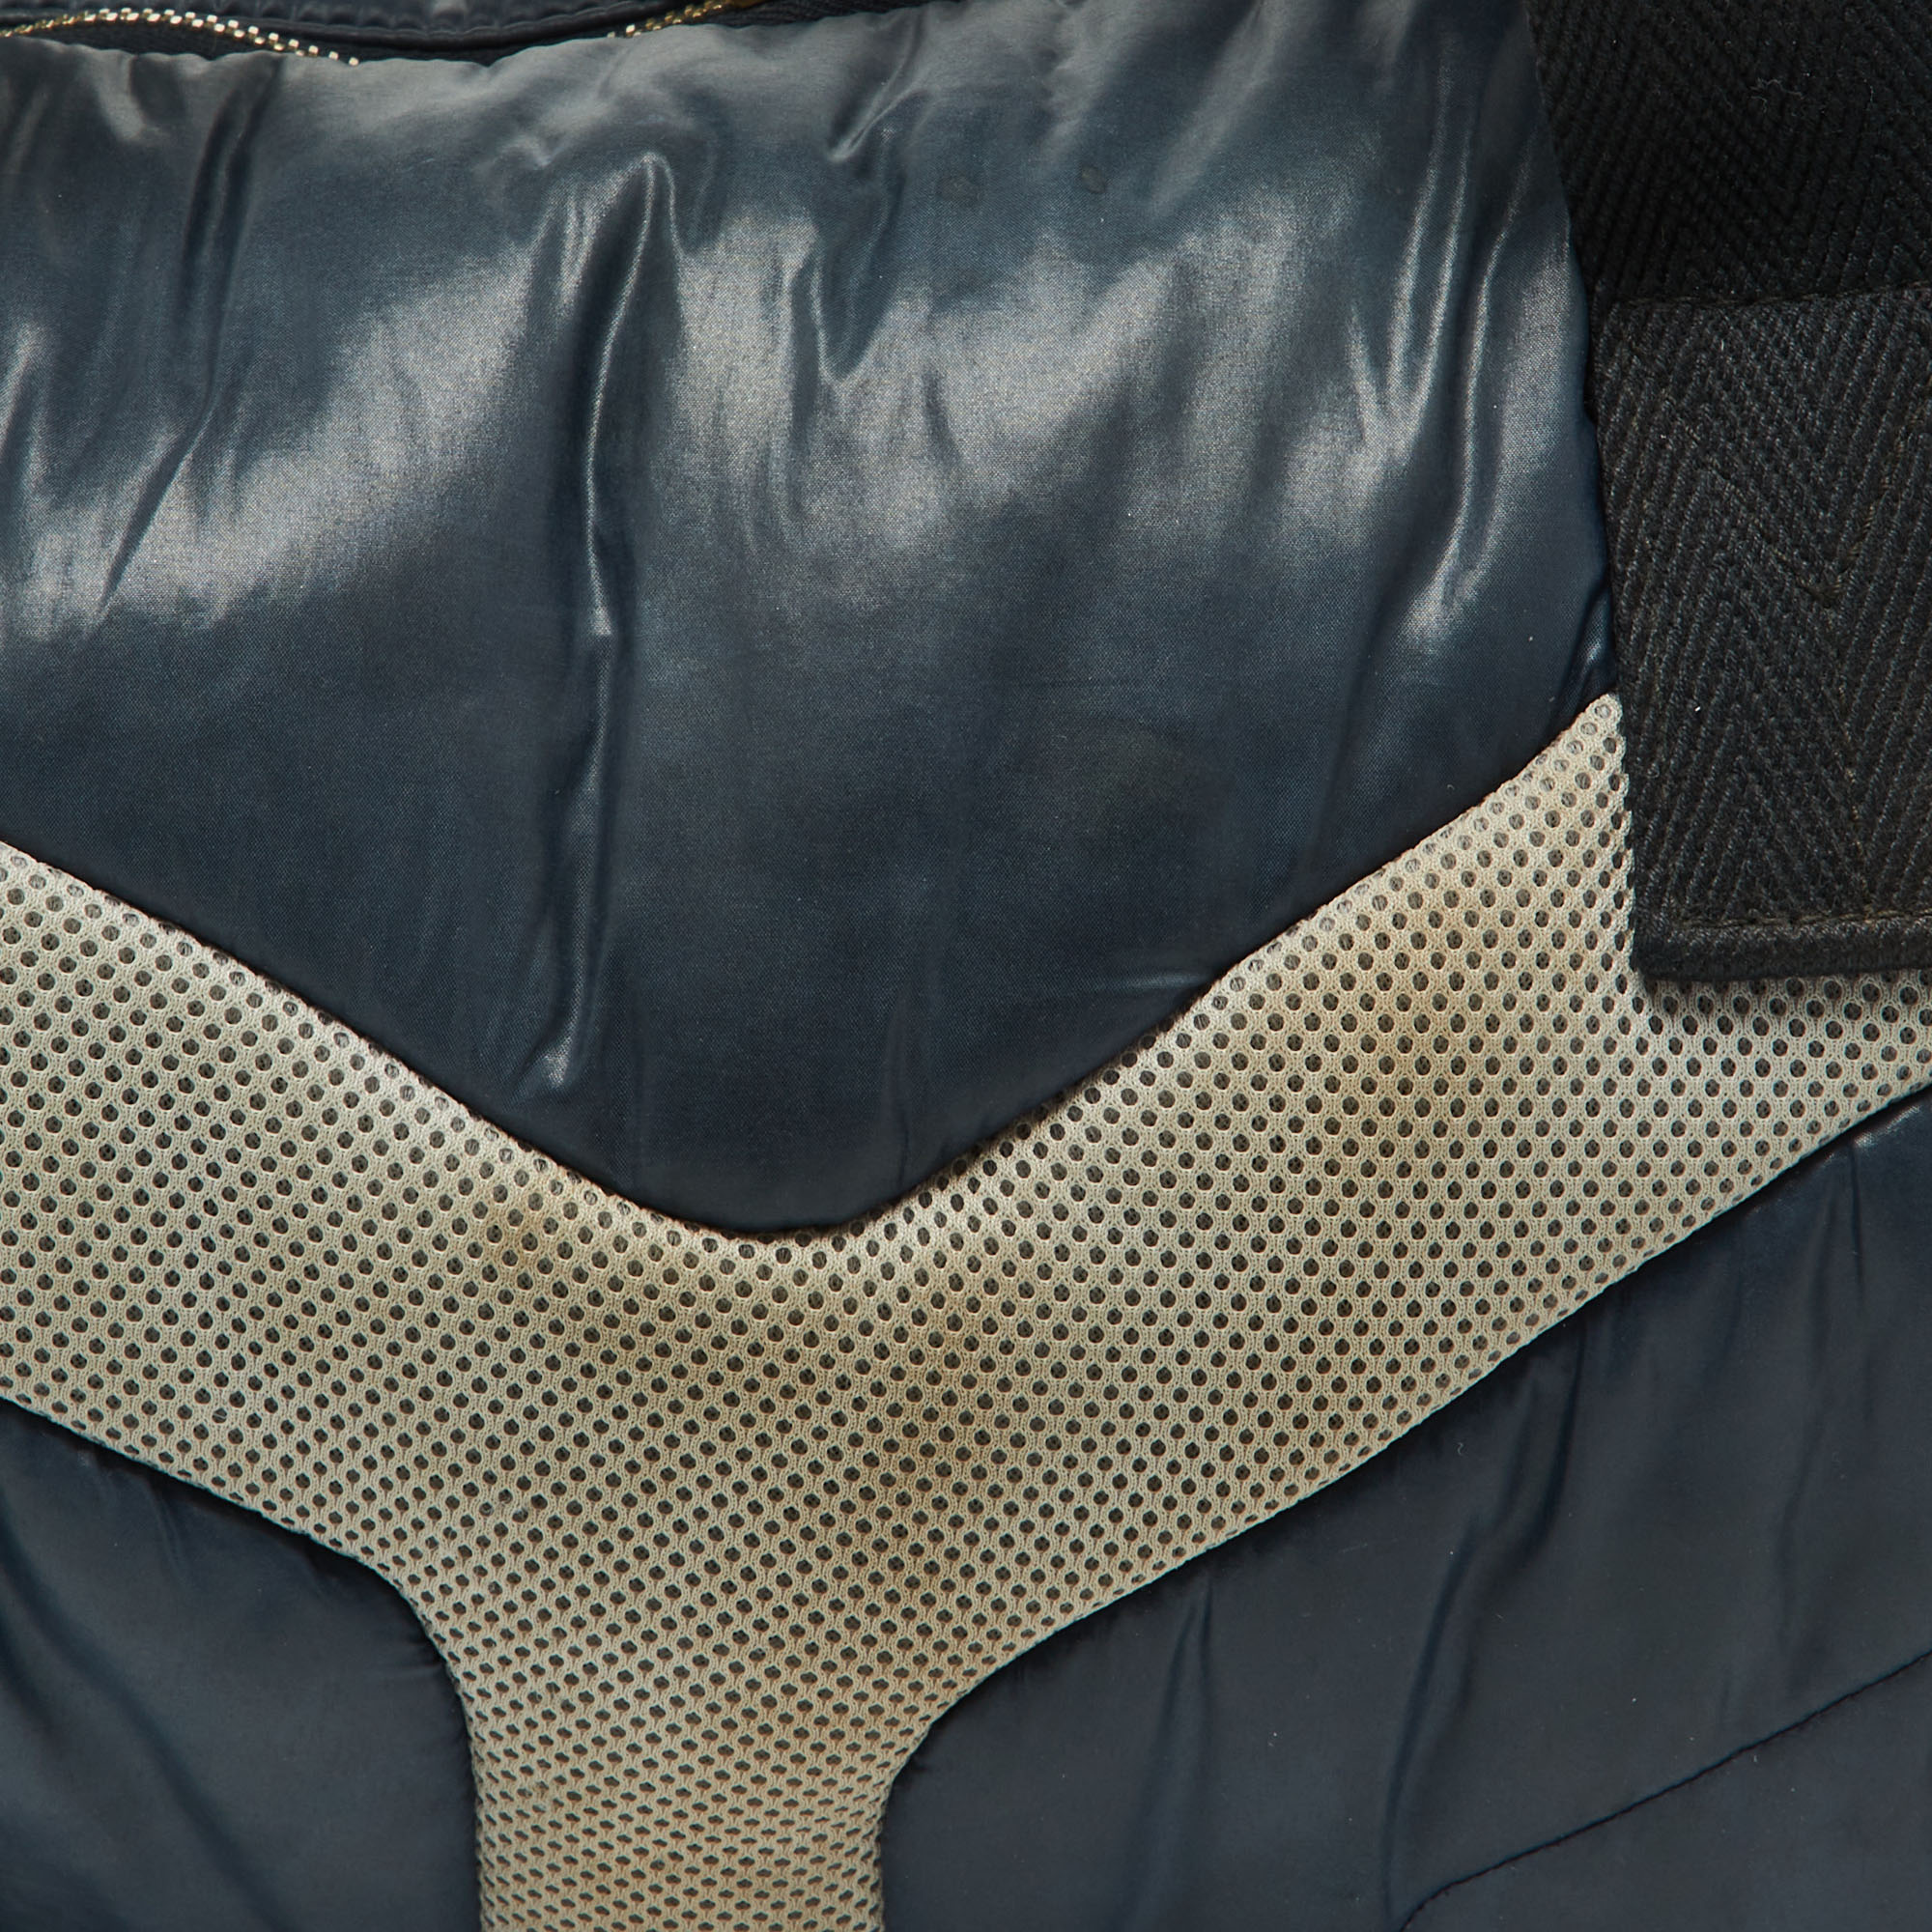 Yves Saint Laurent Navy Blue Satin And Knit Fabric Duffel Bag